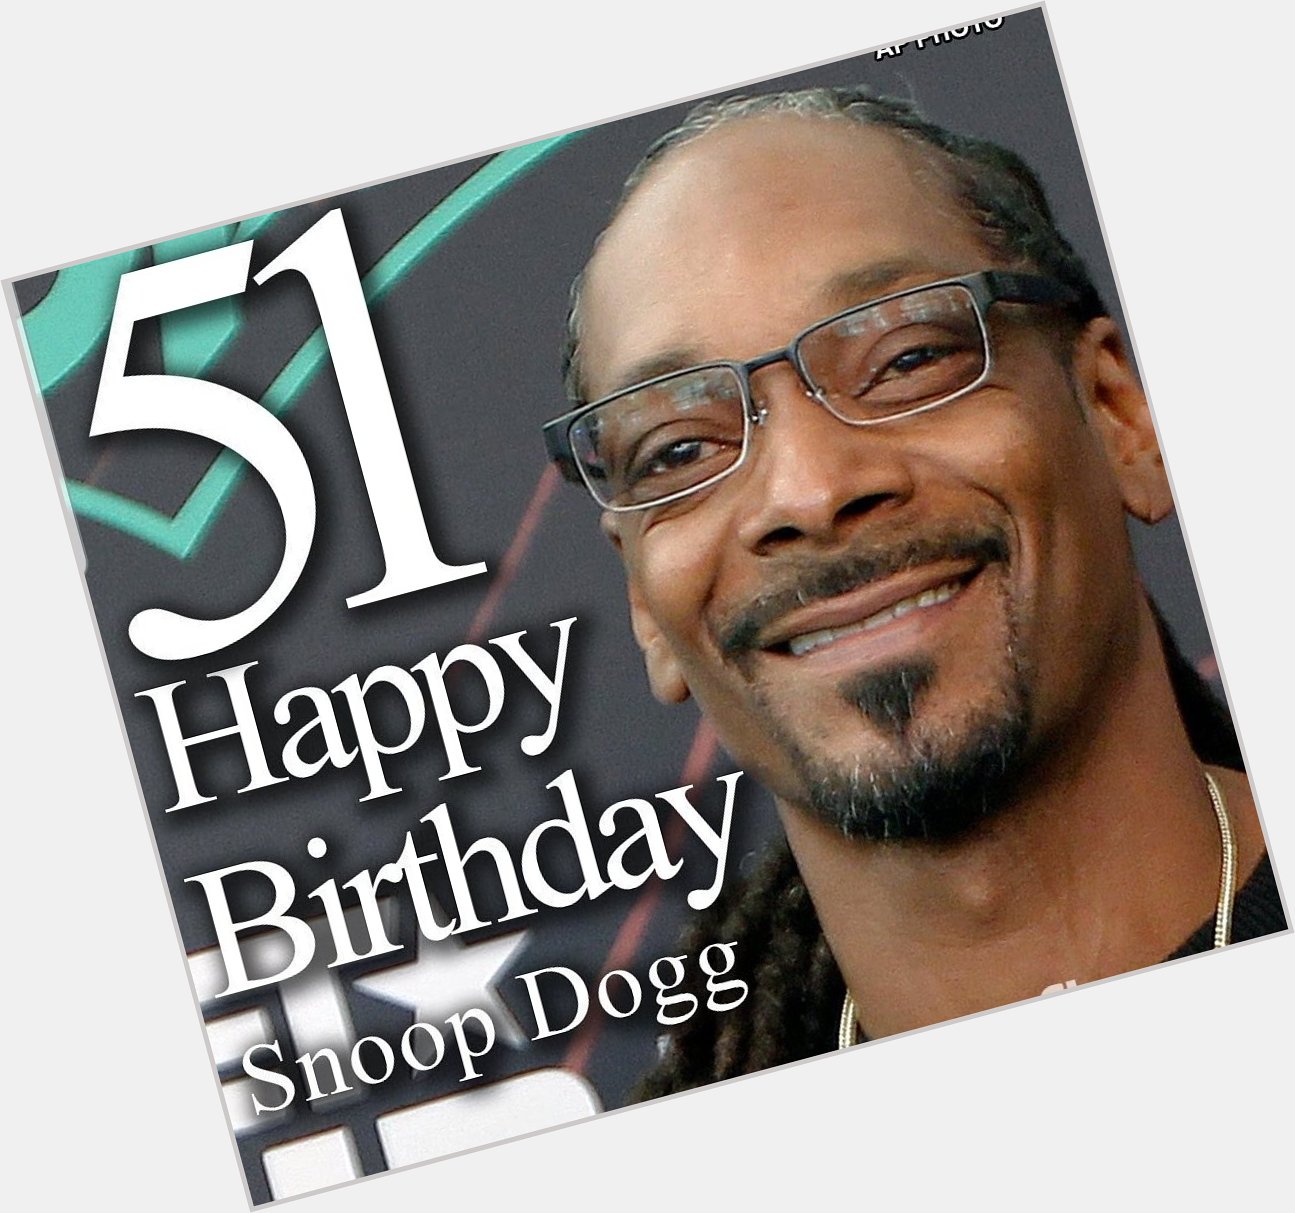 Happy 51st Birthday to Snoop Dogg 